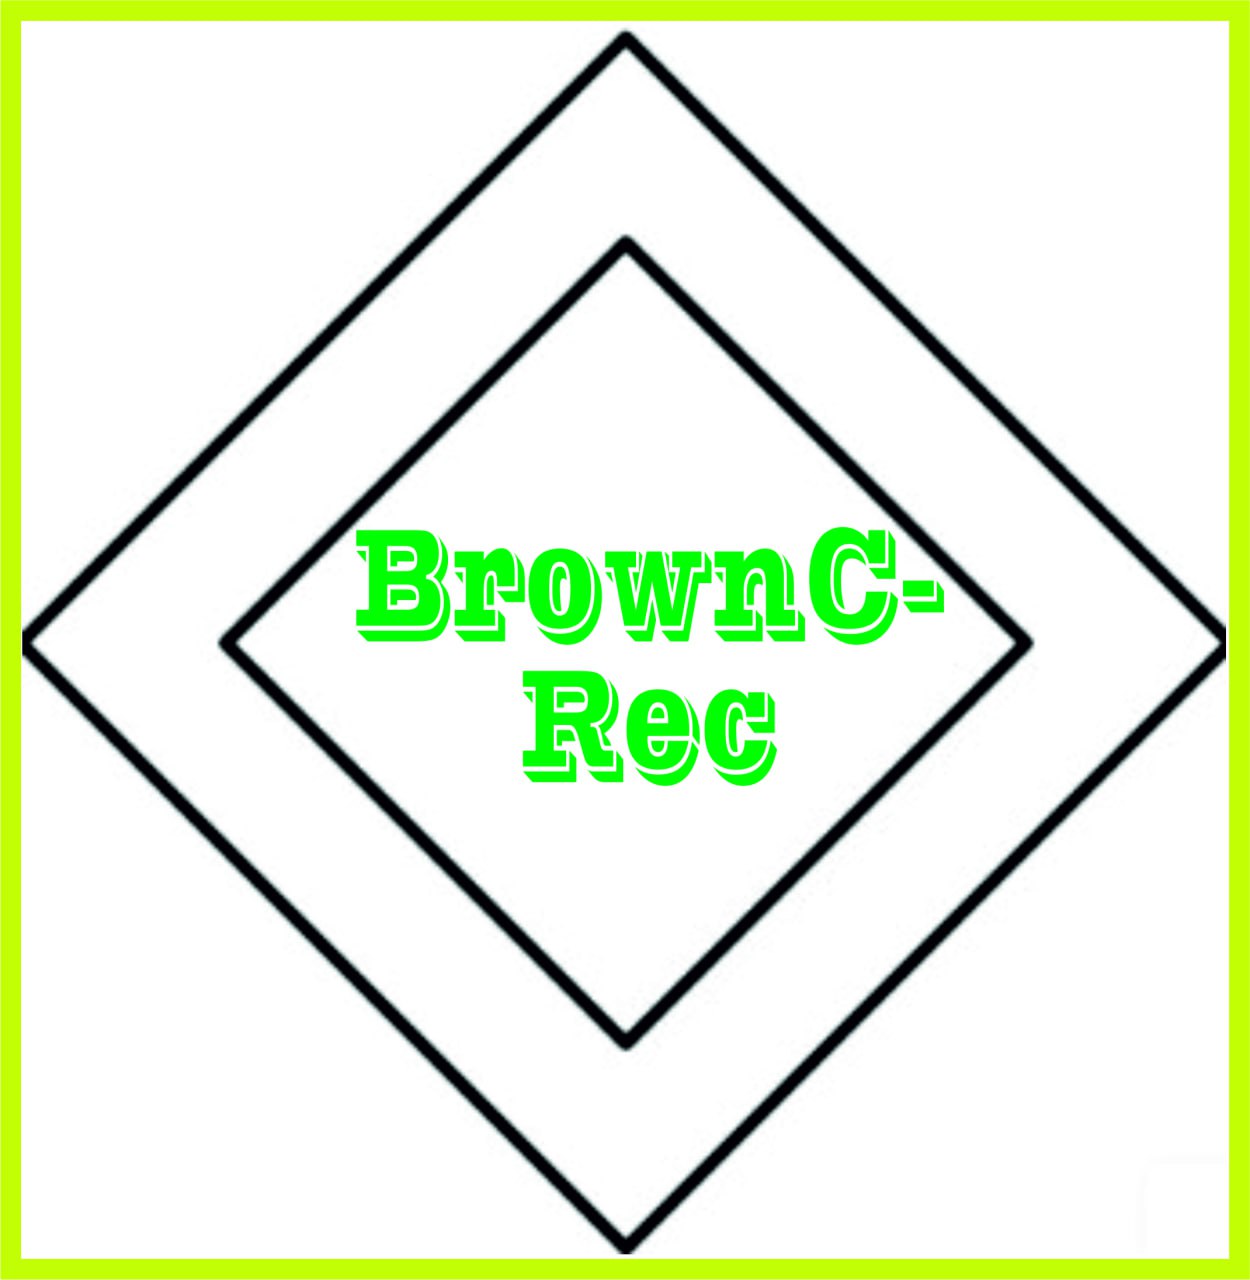 BrownC-Rec